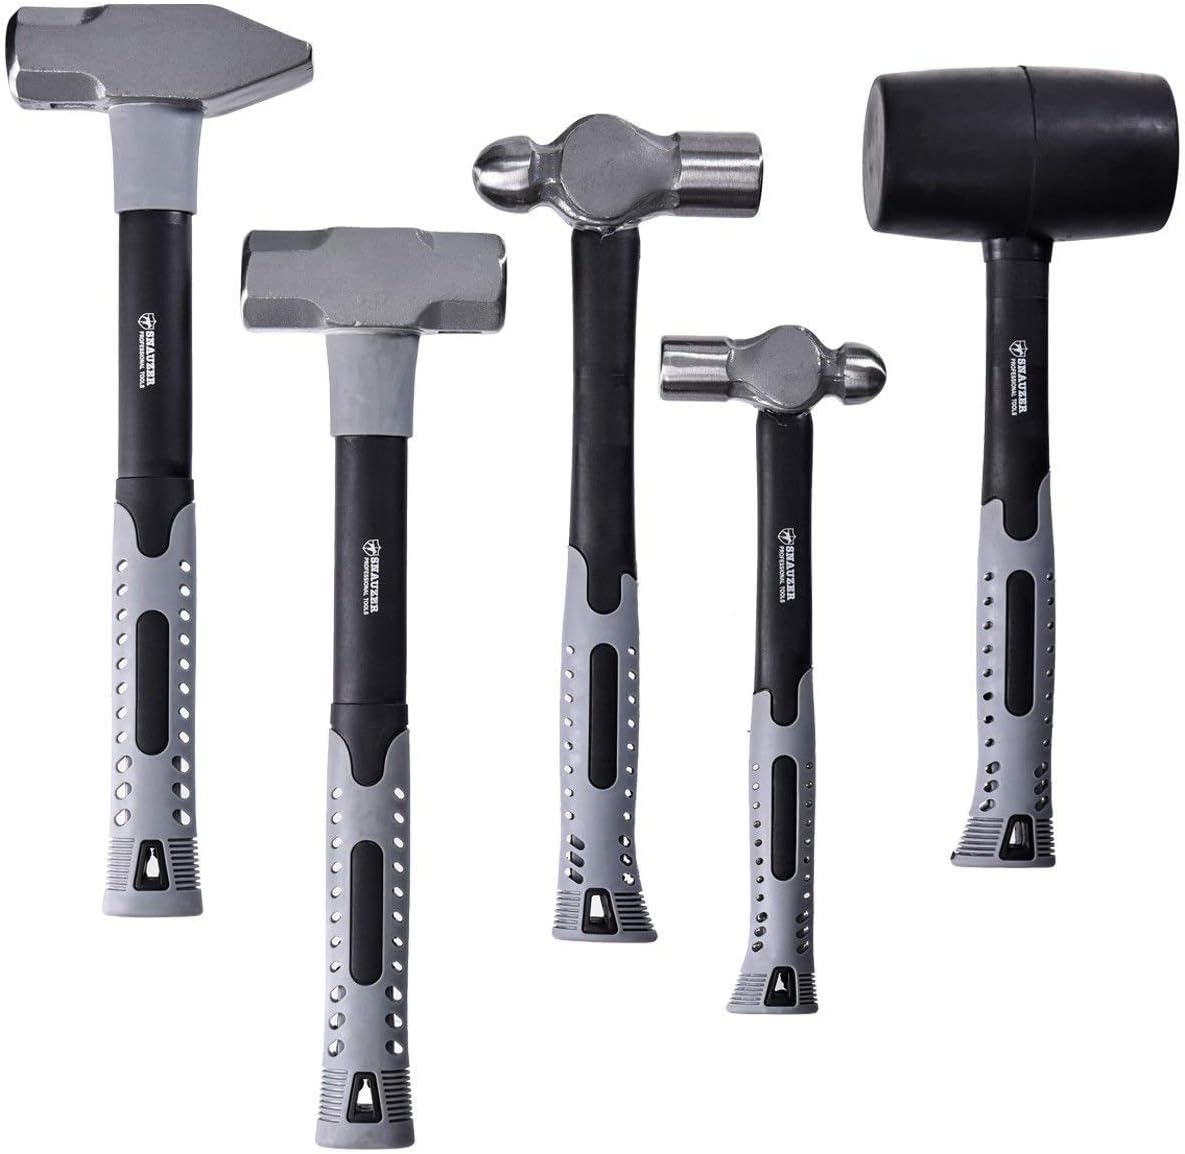 Goplus 5-Piece Hammer Set, 16/32 OZ Ball Pein Hammer, Rubber Mallet, Sledge Hammer, Cross Pein Hammer, Blacksmith Forge Tool w/Non-sli